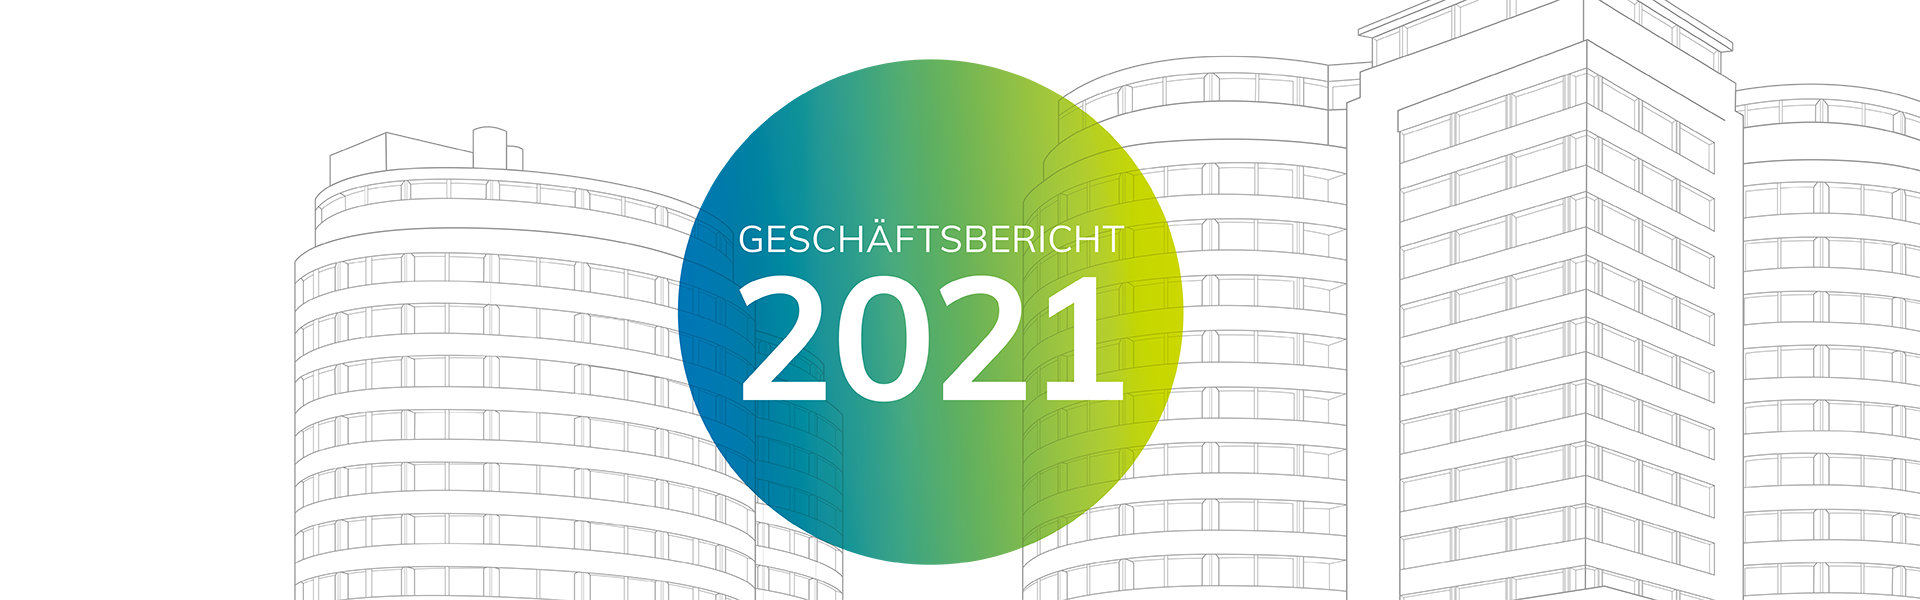 Universitätsklinikum Münster | Geschäftsbericht 2021 